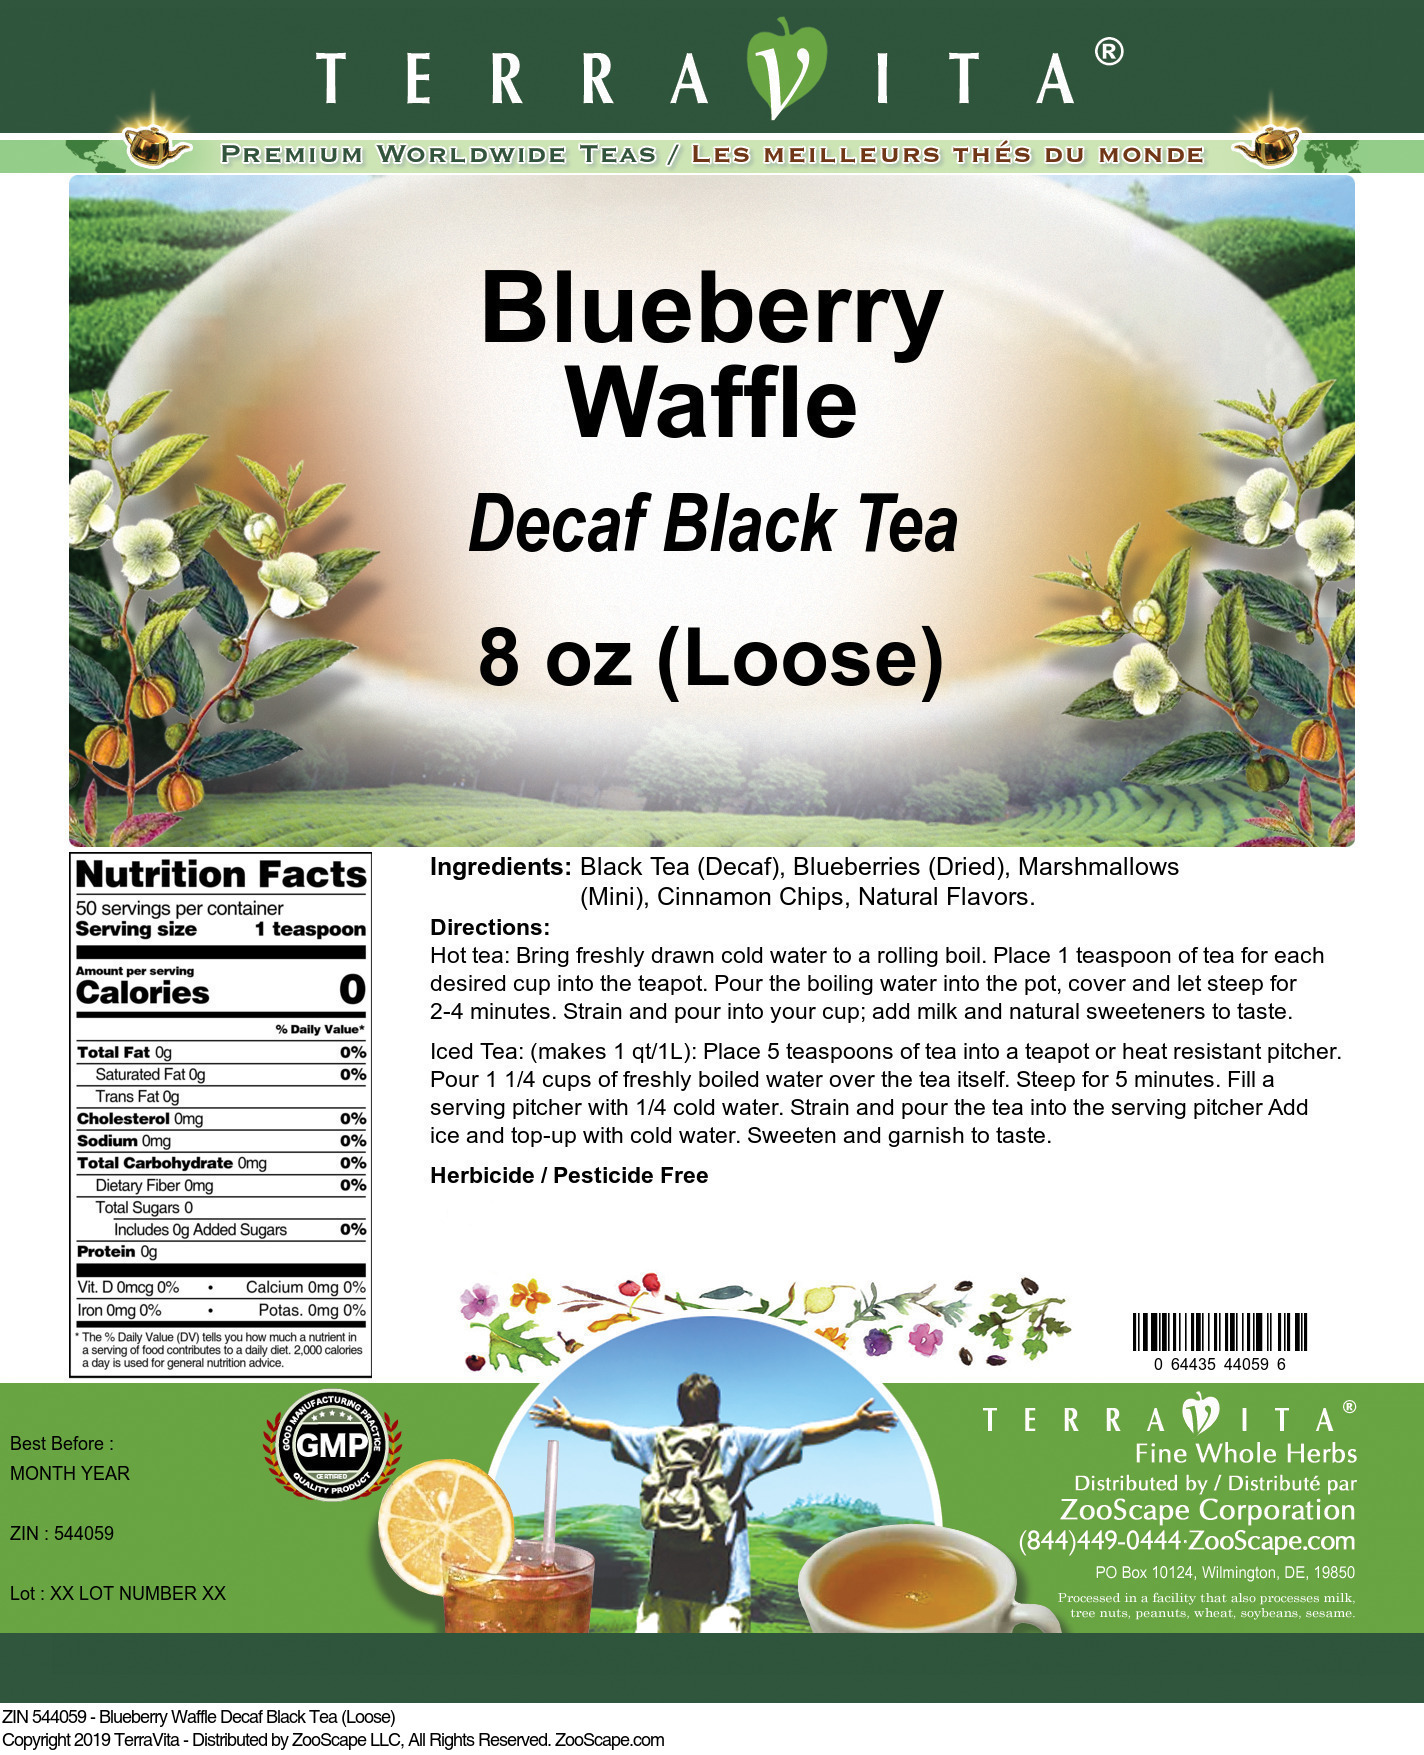 Blueberry Waffle Decaf Black Tea (Loose) - Label